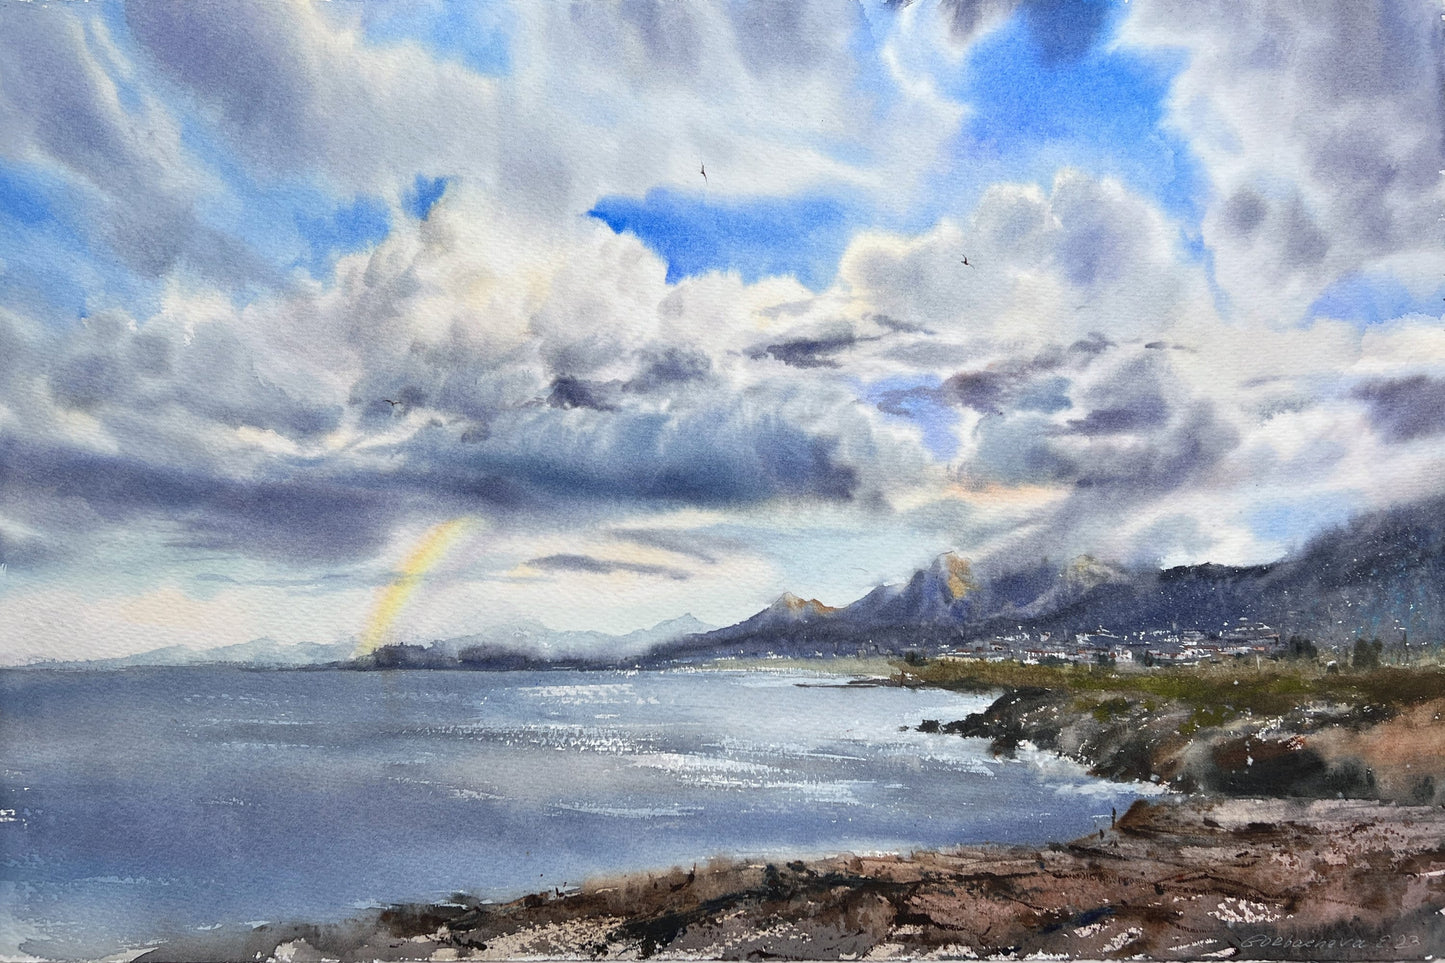 Sea Coast Painting 22x15 in, Original Watercolour, Rainbow Artwork, Blue Sky Art, Beach Home Wall Decor, Clouds, Gift